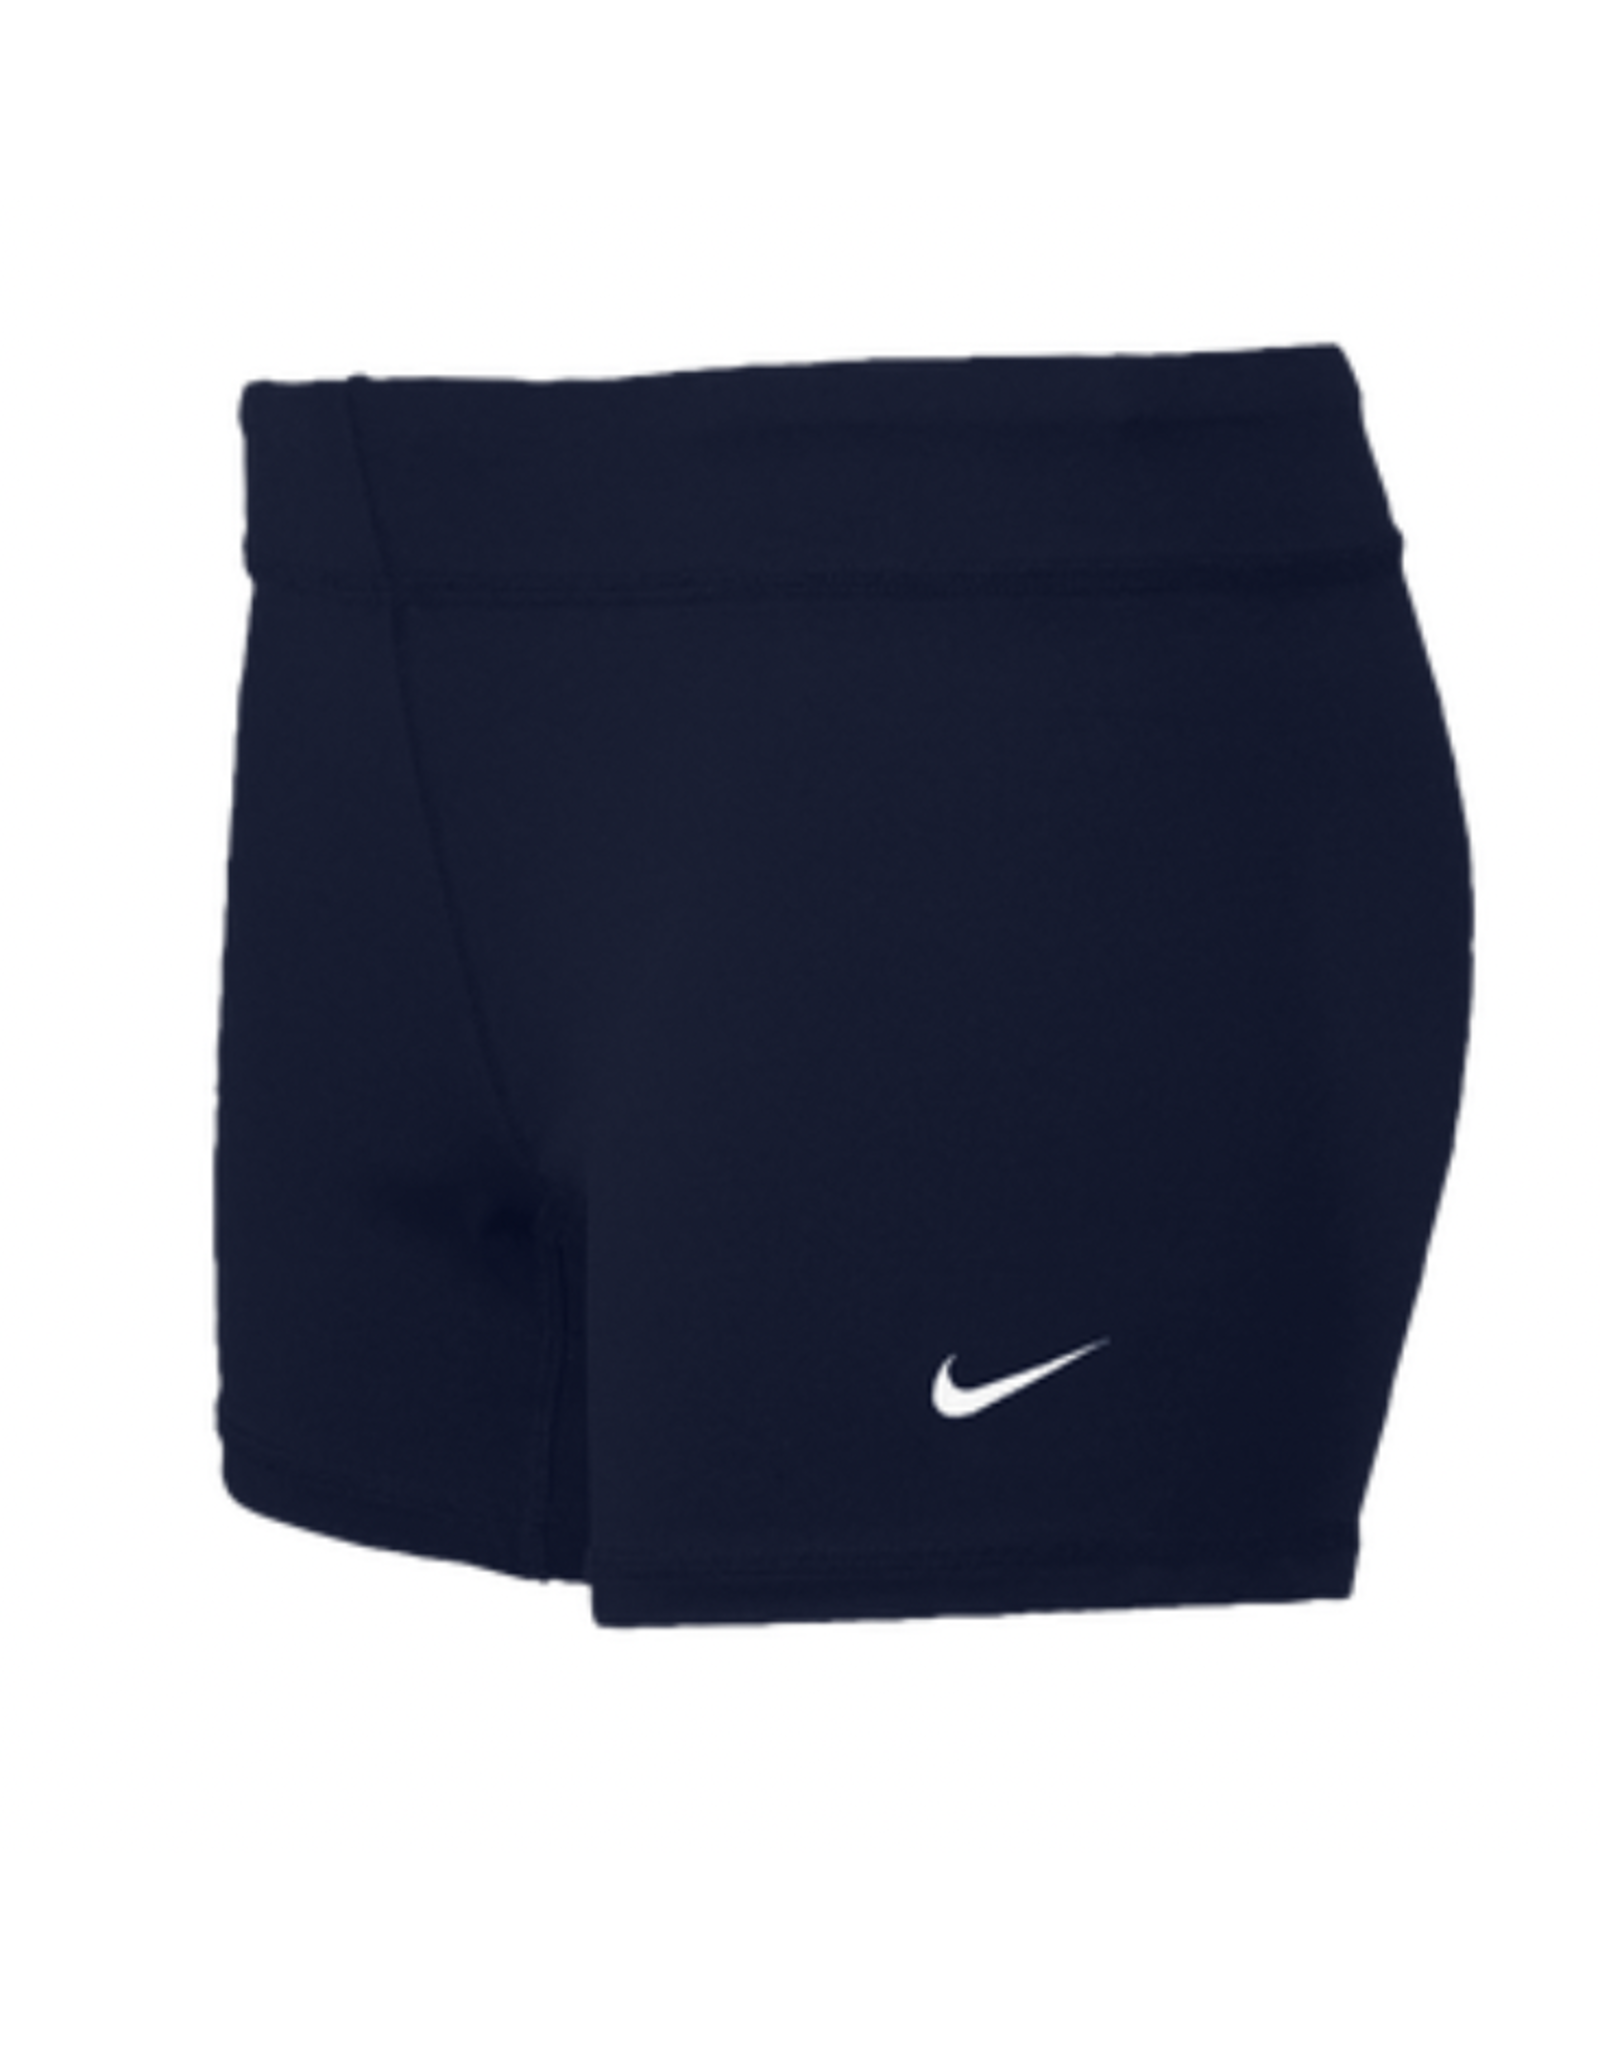 NON-UNIFORM Nike Team Performance Game Shorts - Women's